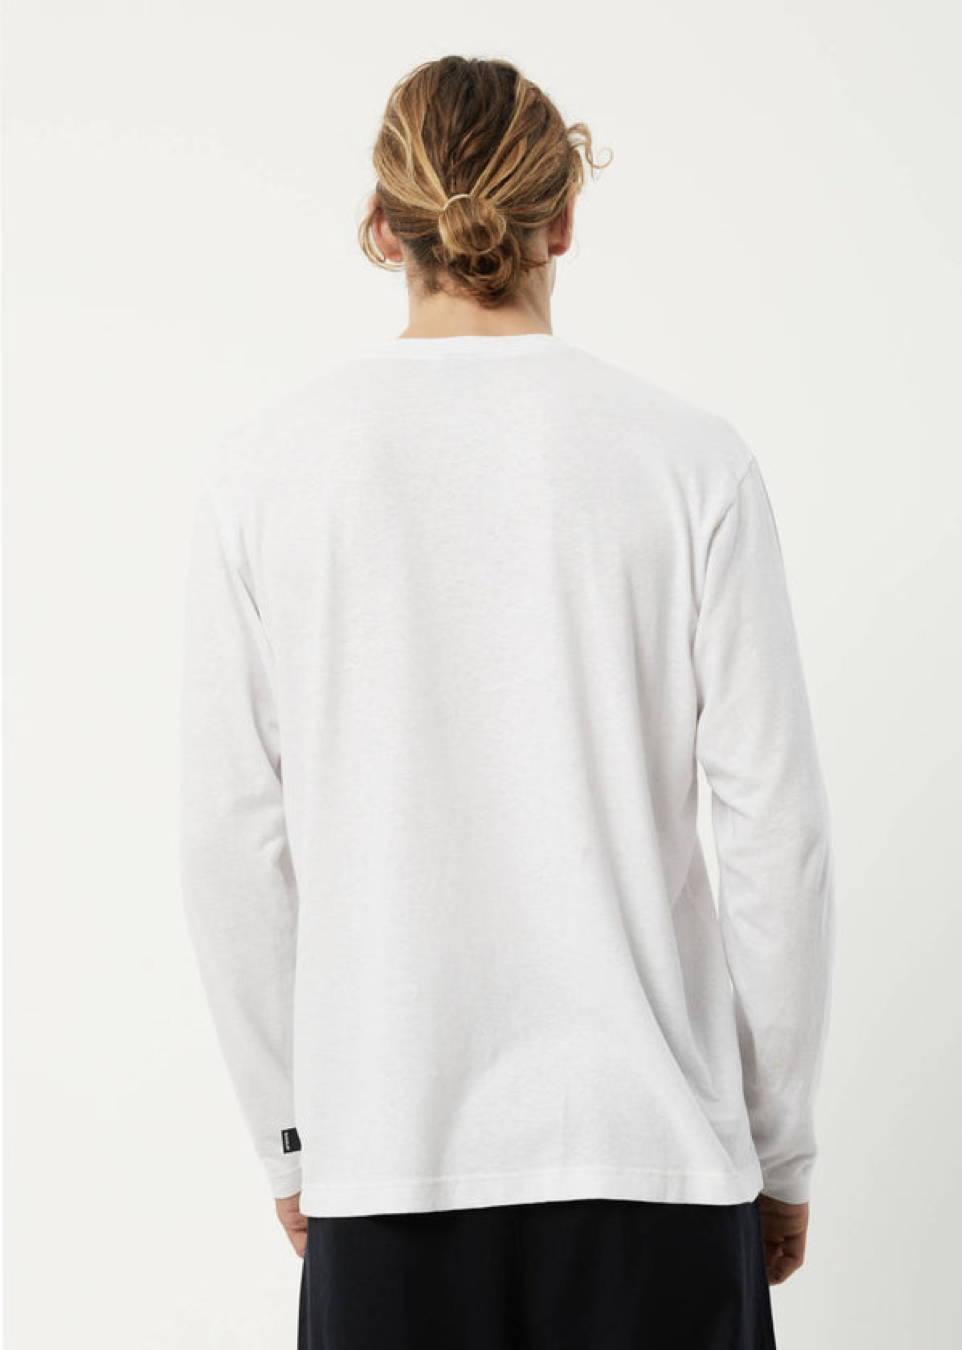 
                  
                    Take It Back - Hemp Graphic Long Sleeve T-Shirt / White
                  
                